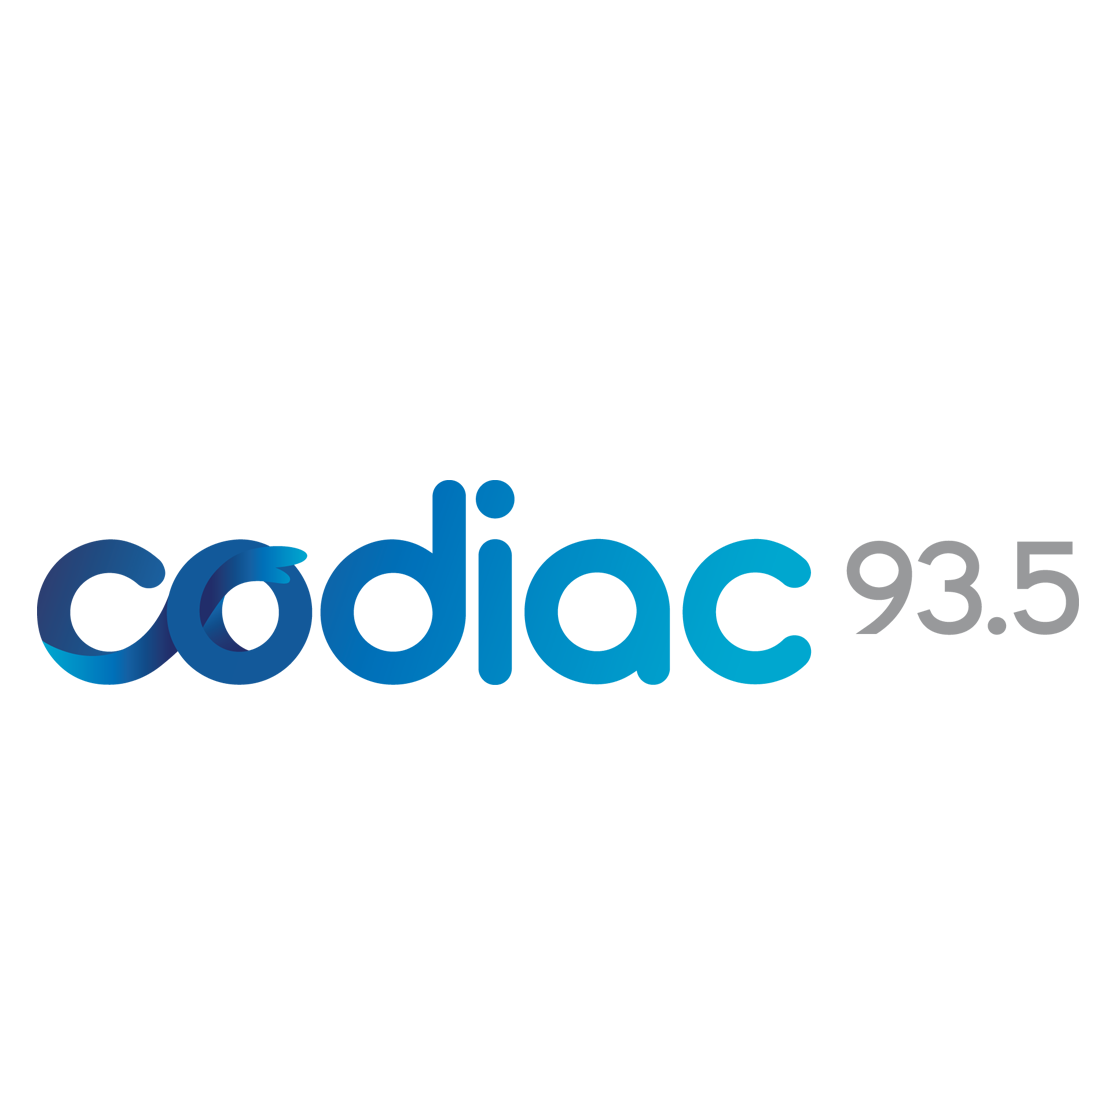 Codiac 93.5 FM